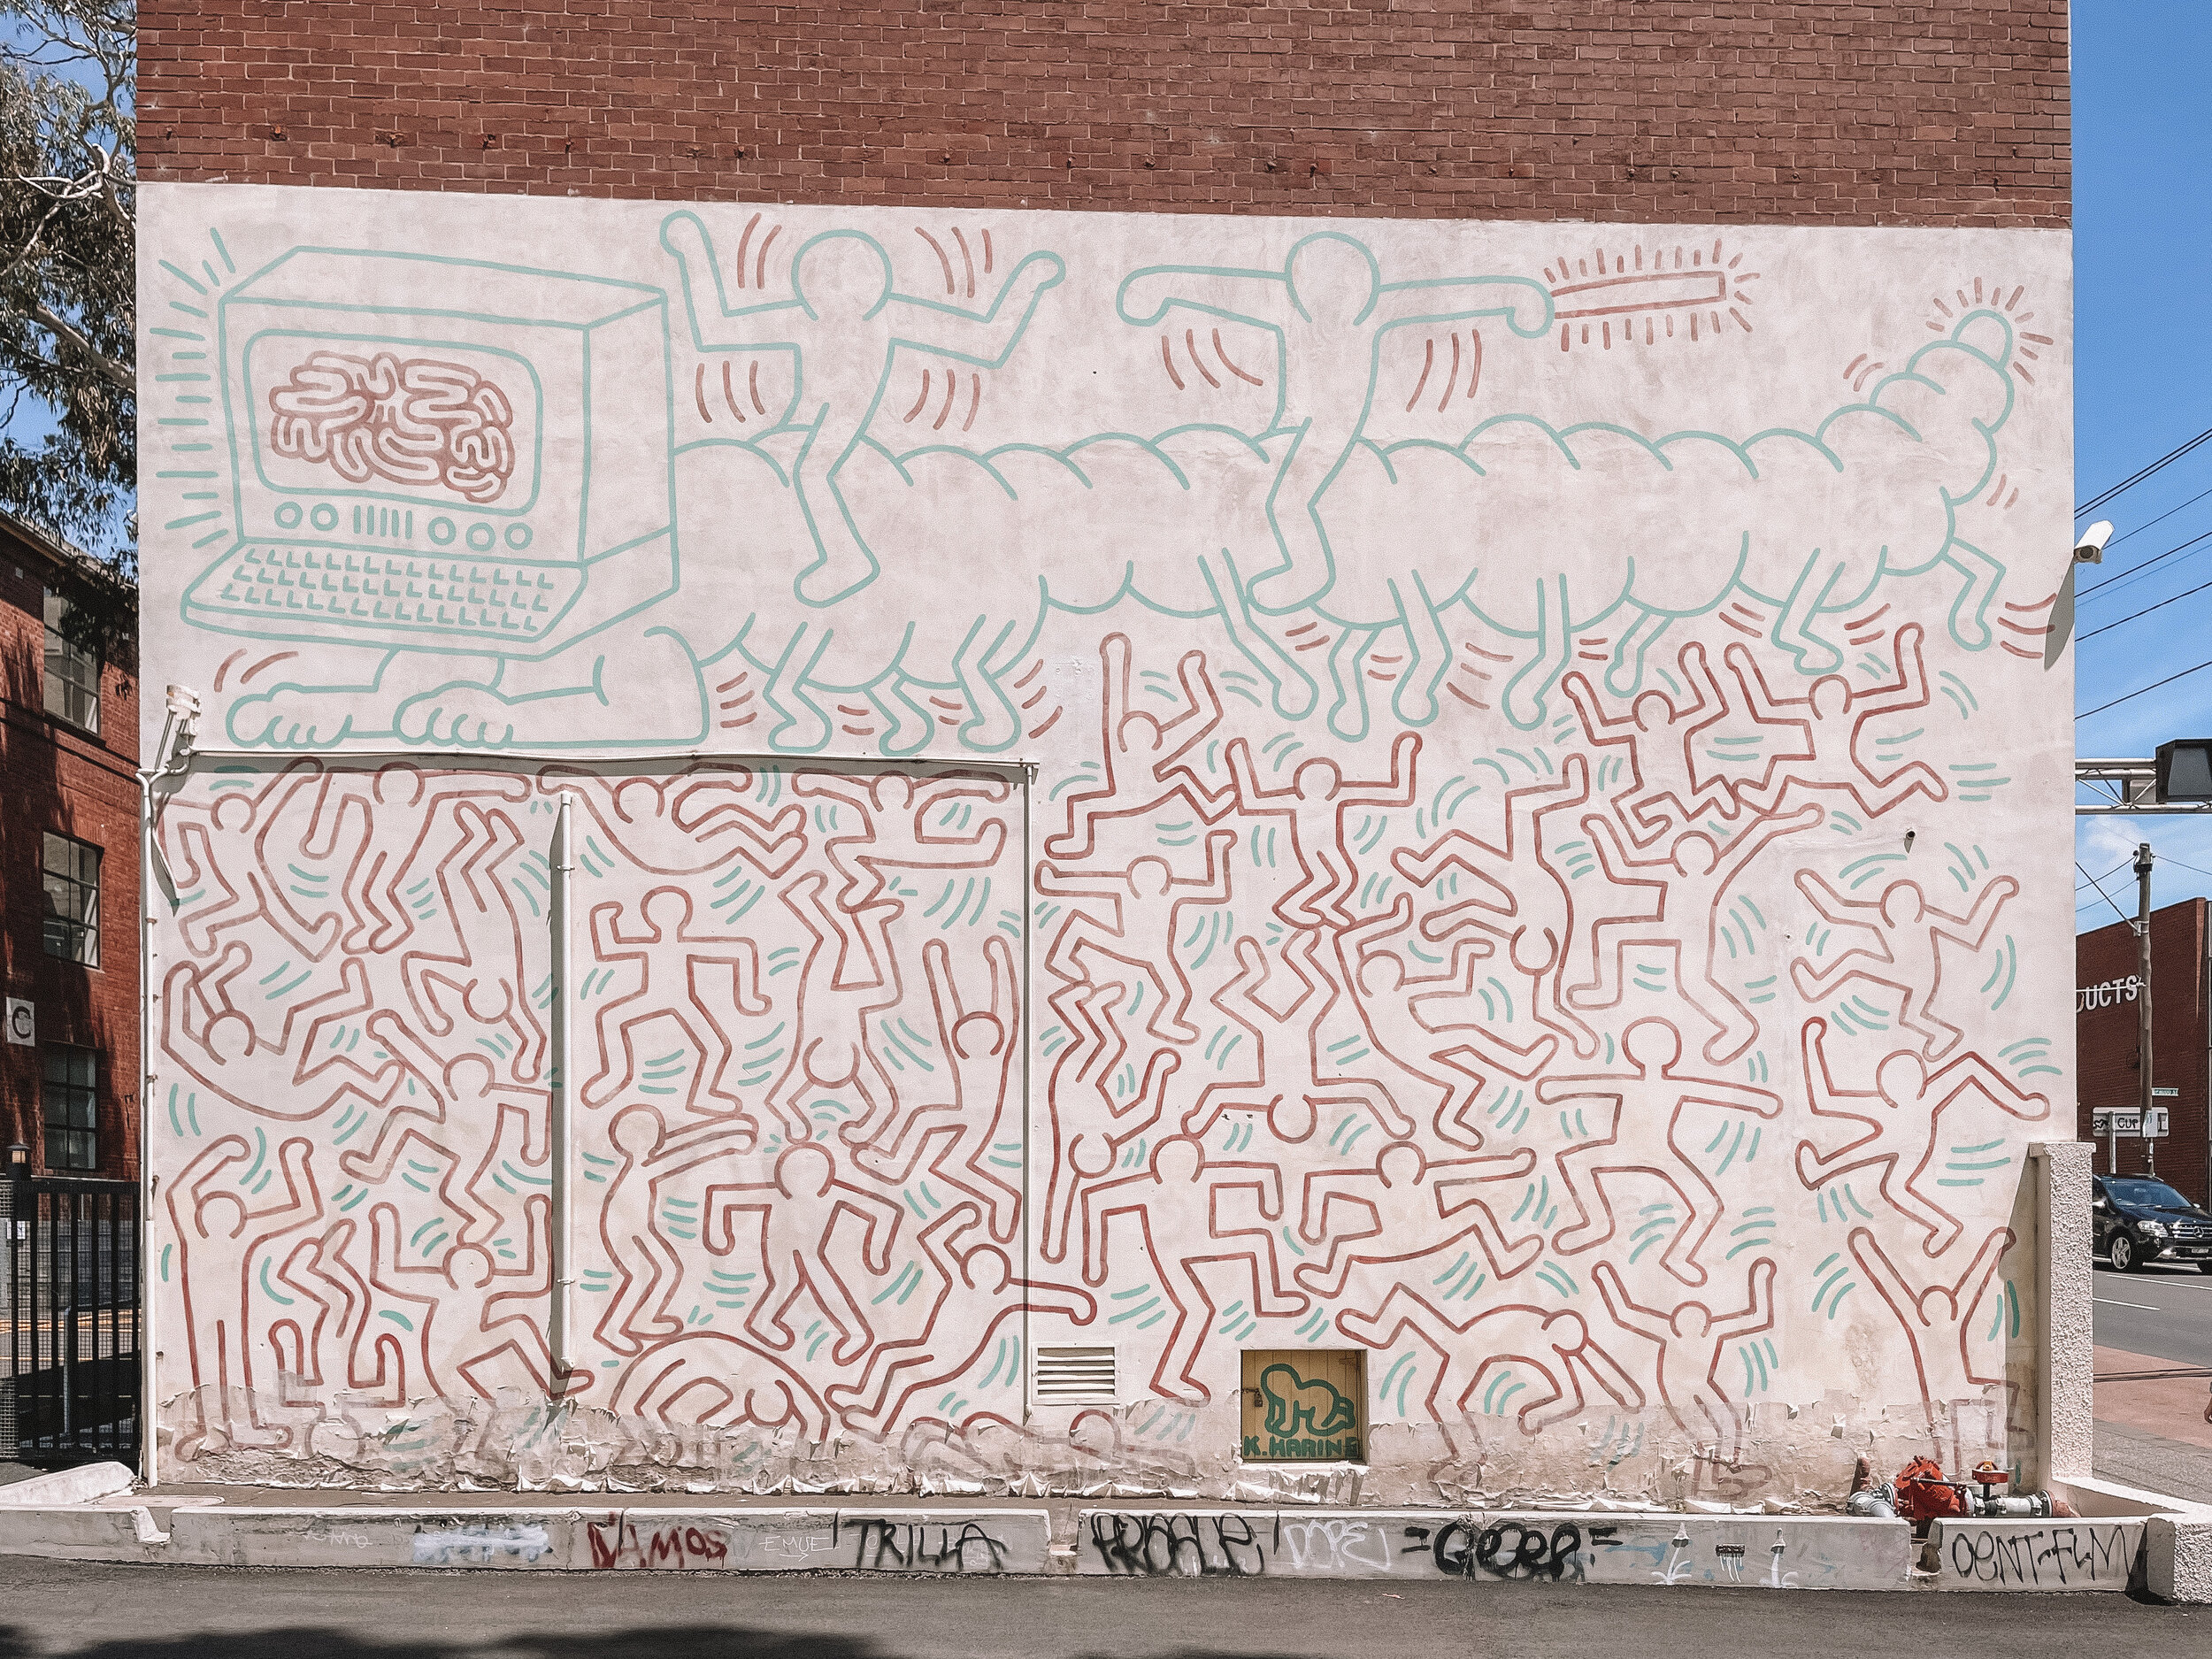 Keith Haring Mural - Collingwood - Melbourne - Victoria - Australia